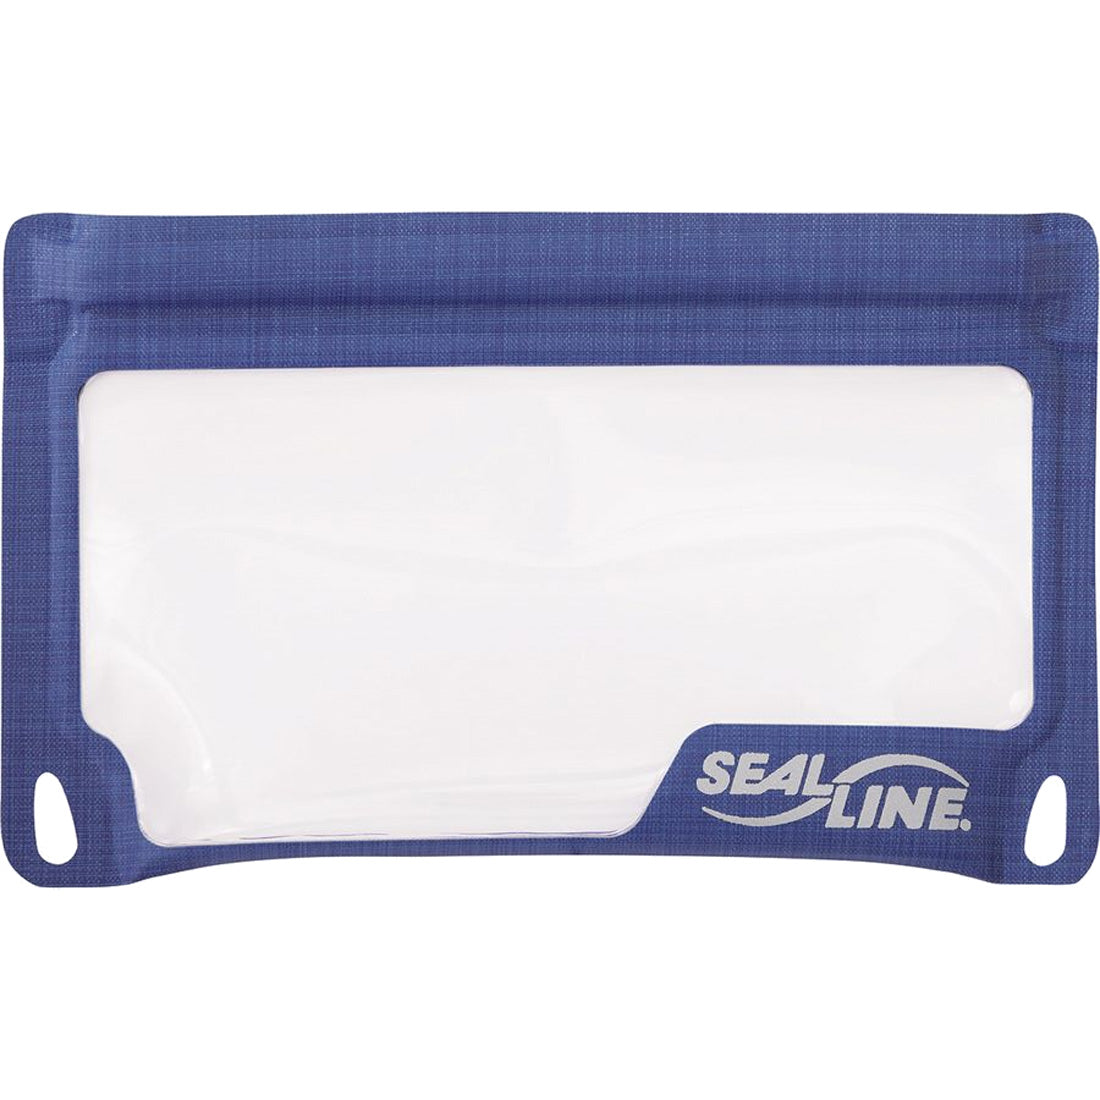 Seal Line (Cascade Designs) Waterproof E-Case - Small